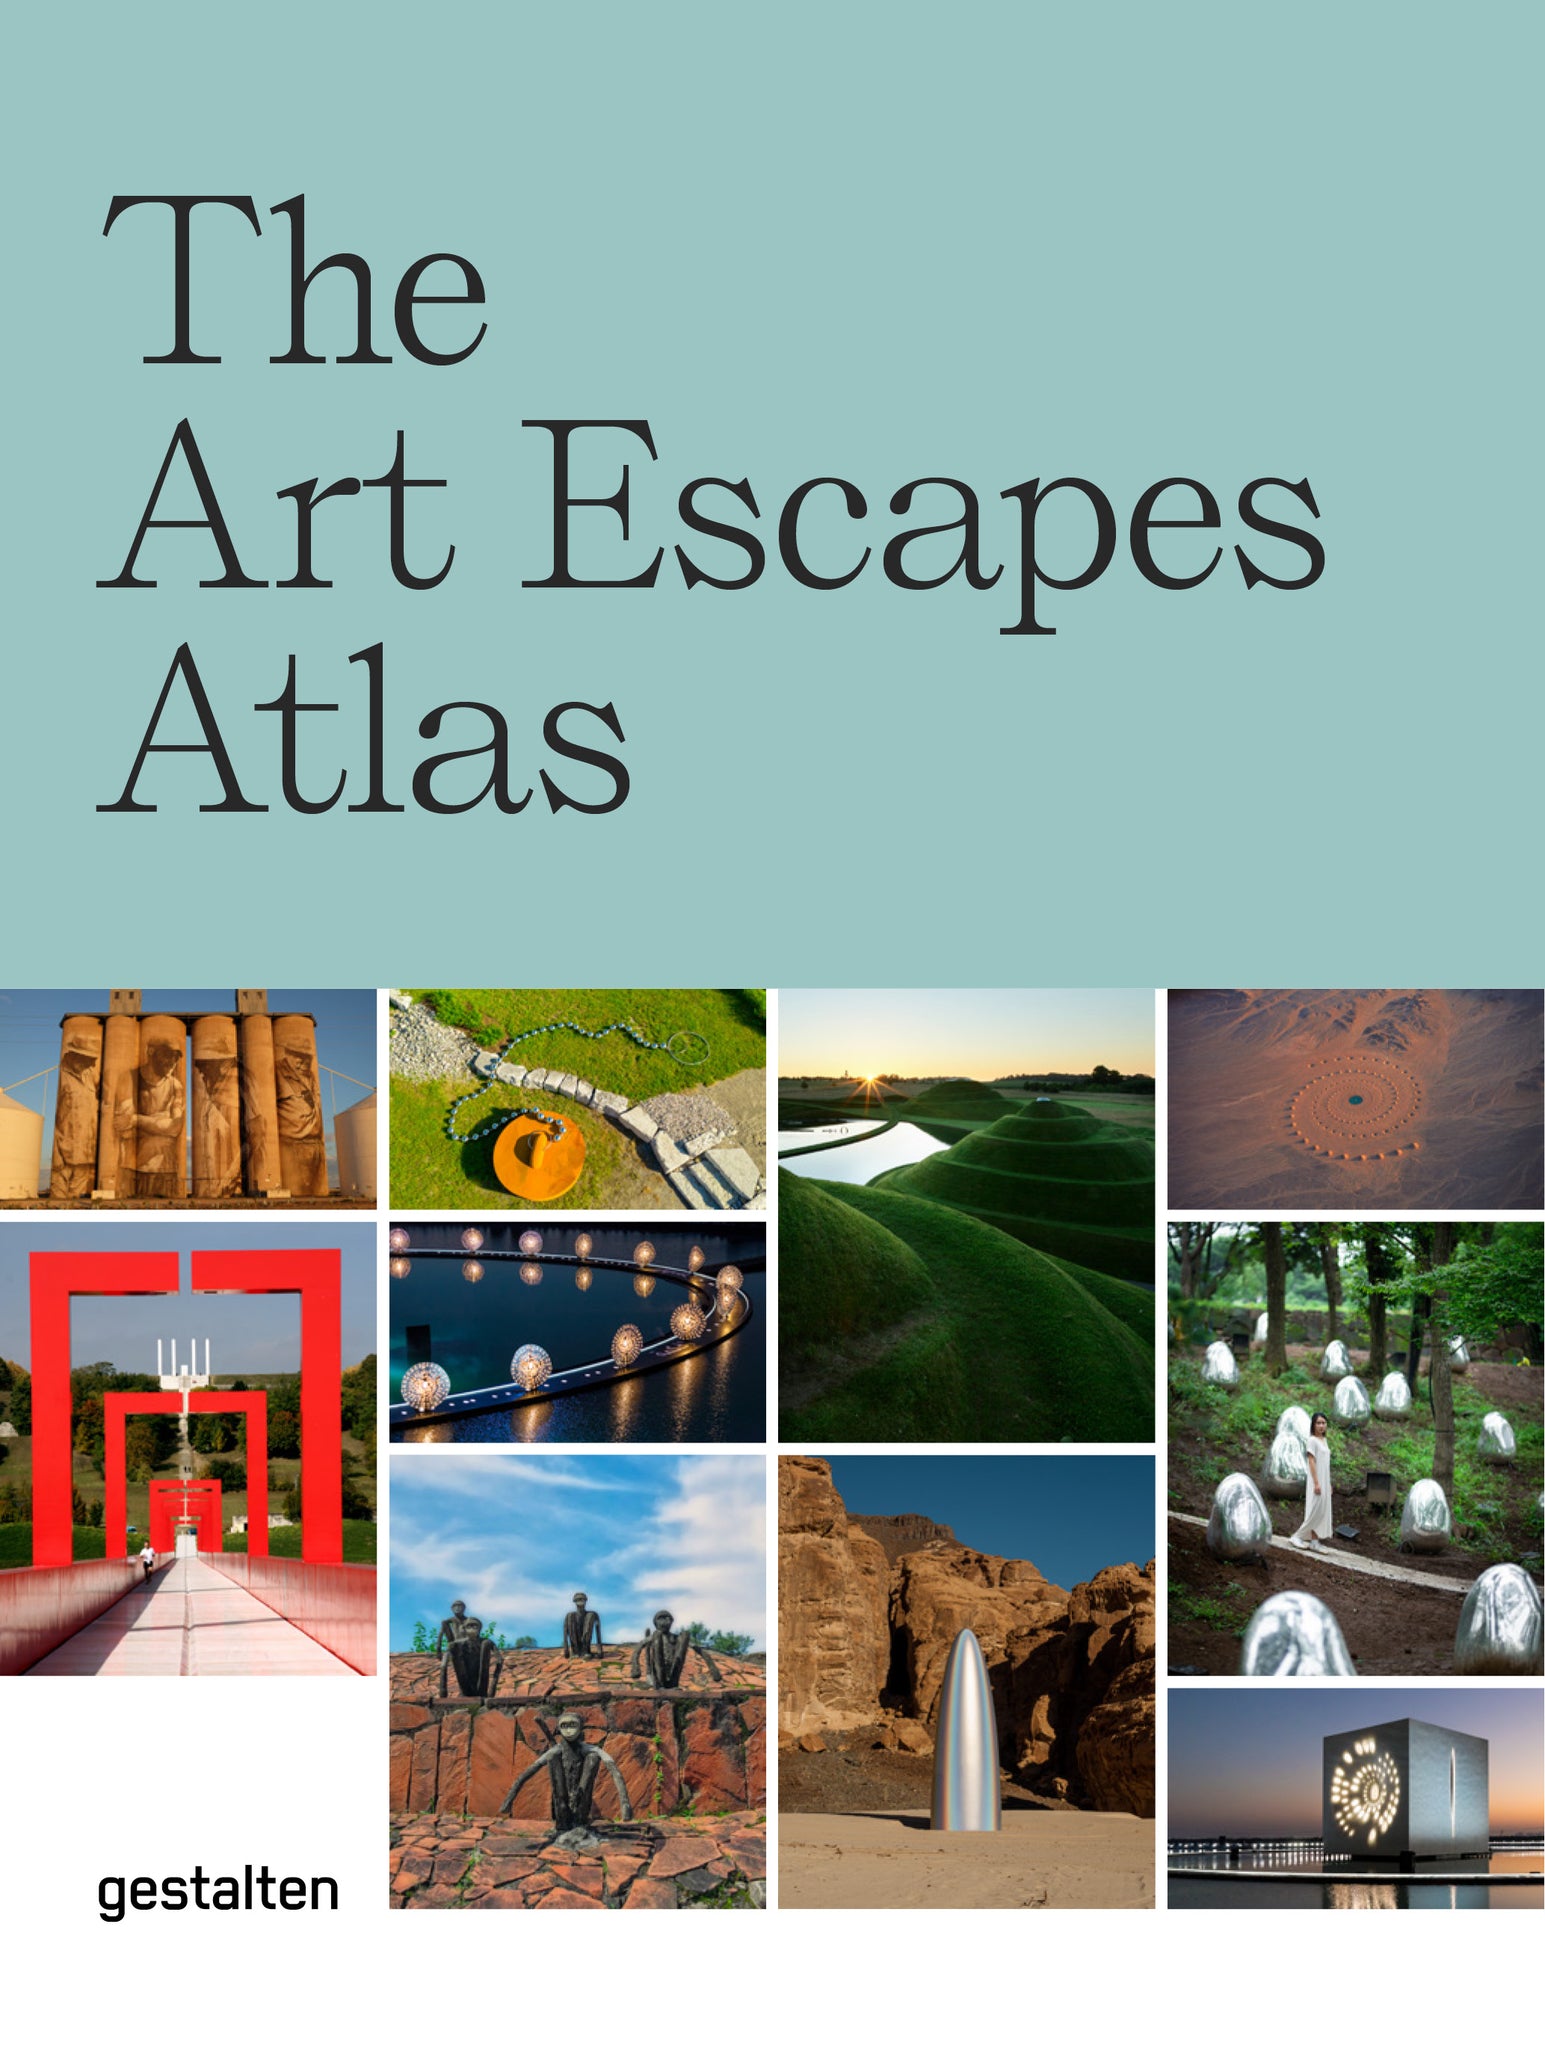 Art Escapes Atlas, the cover